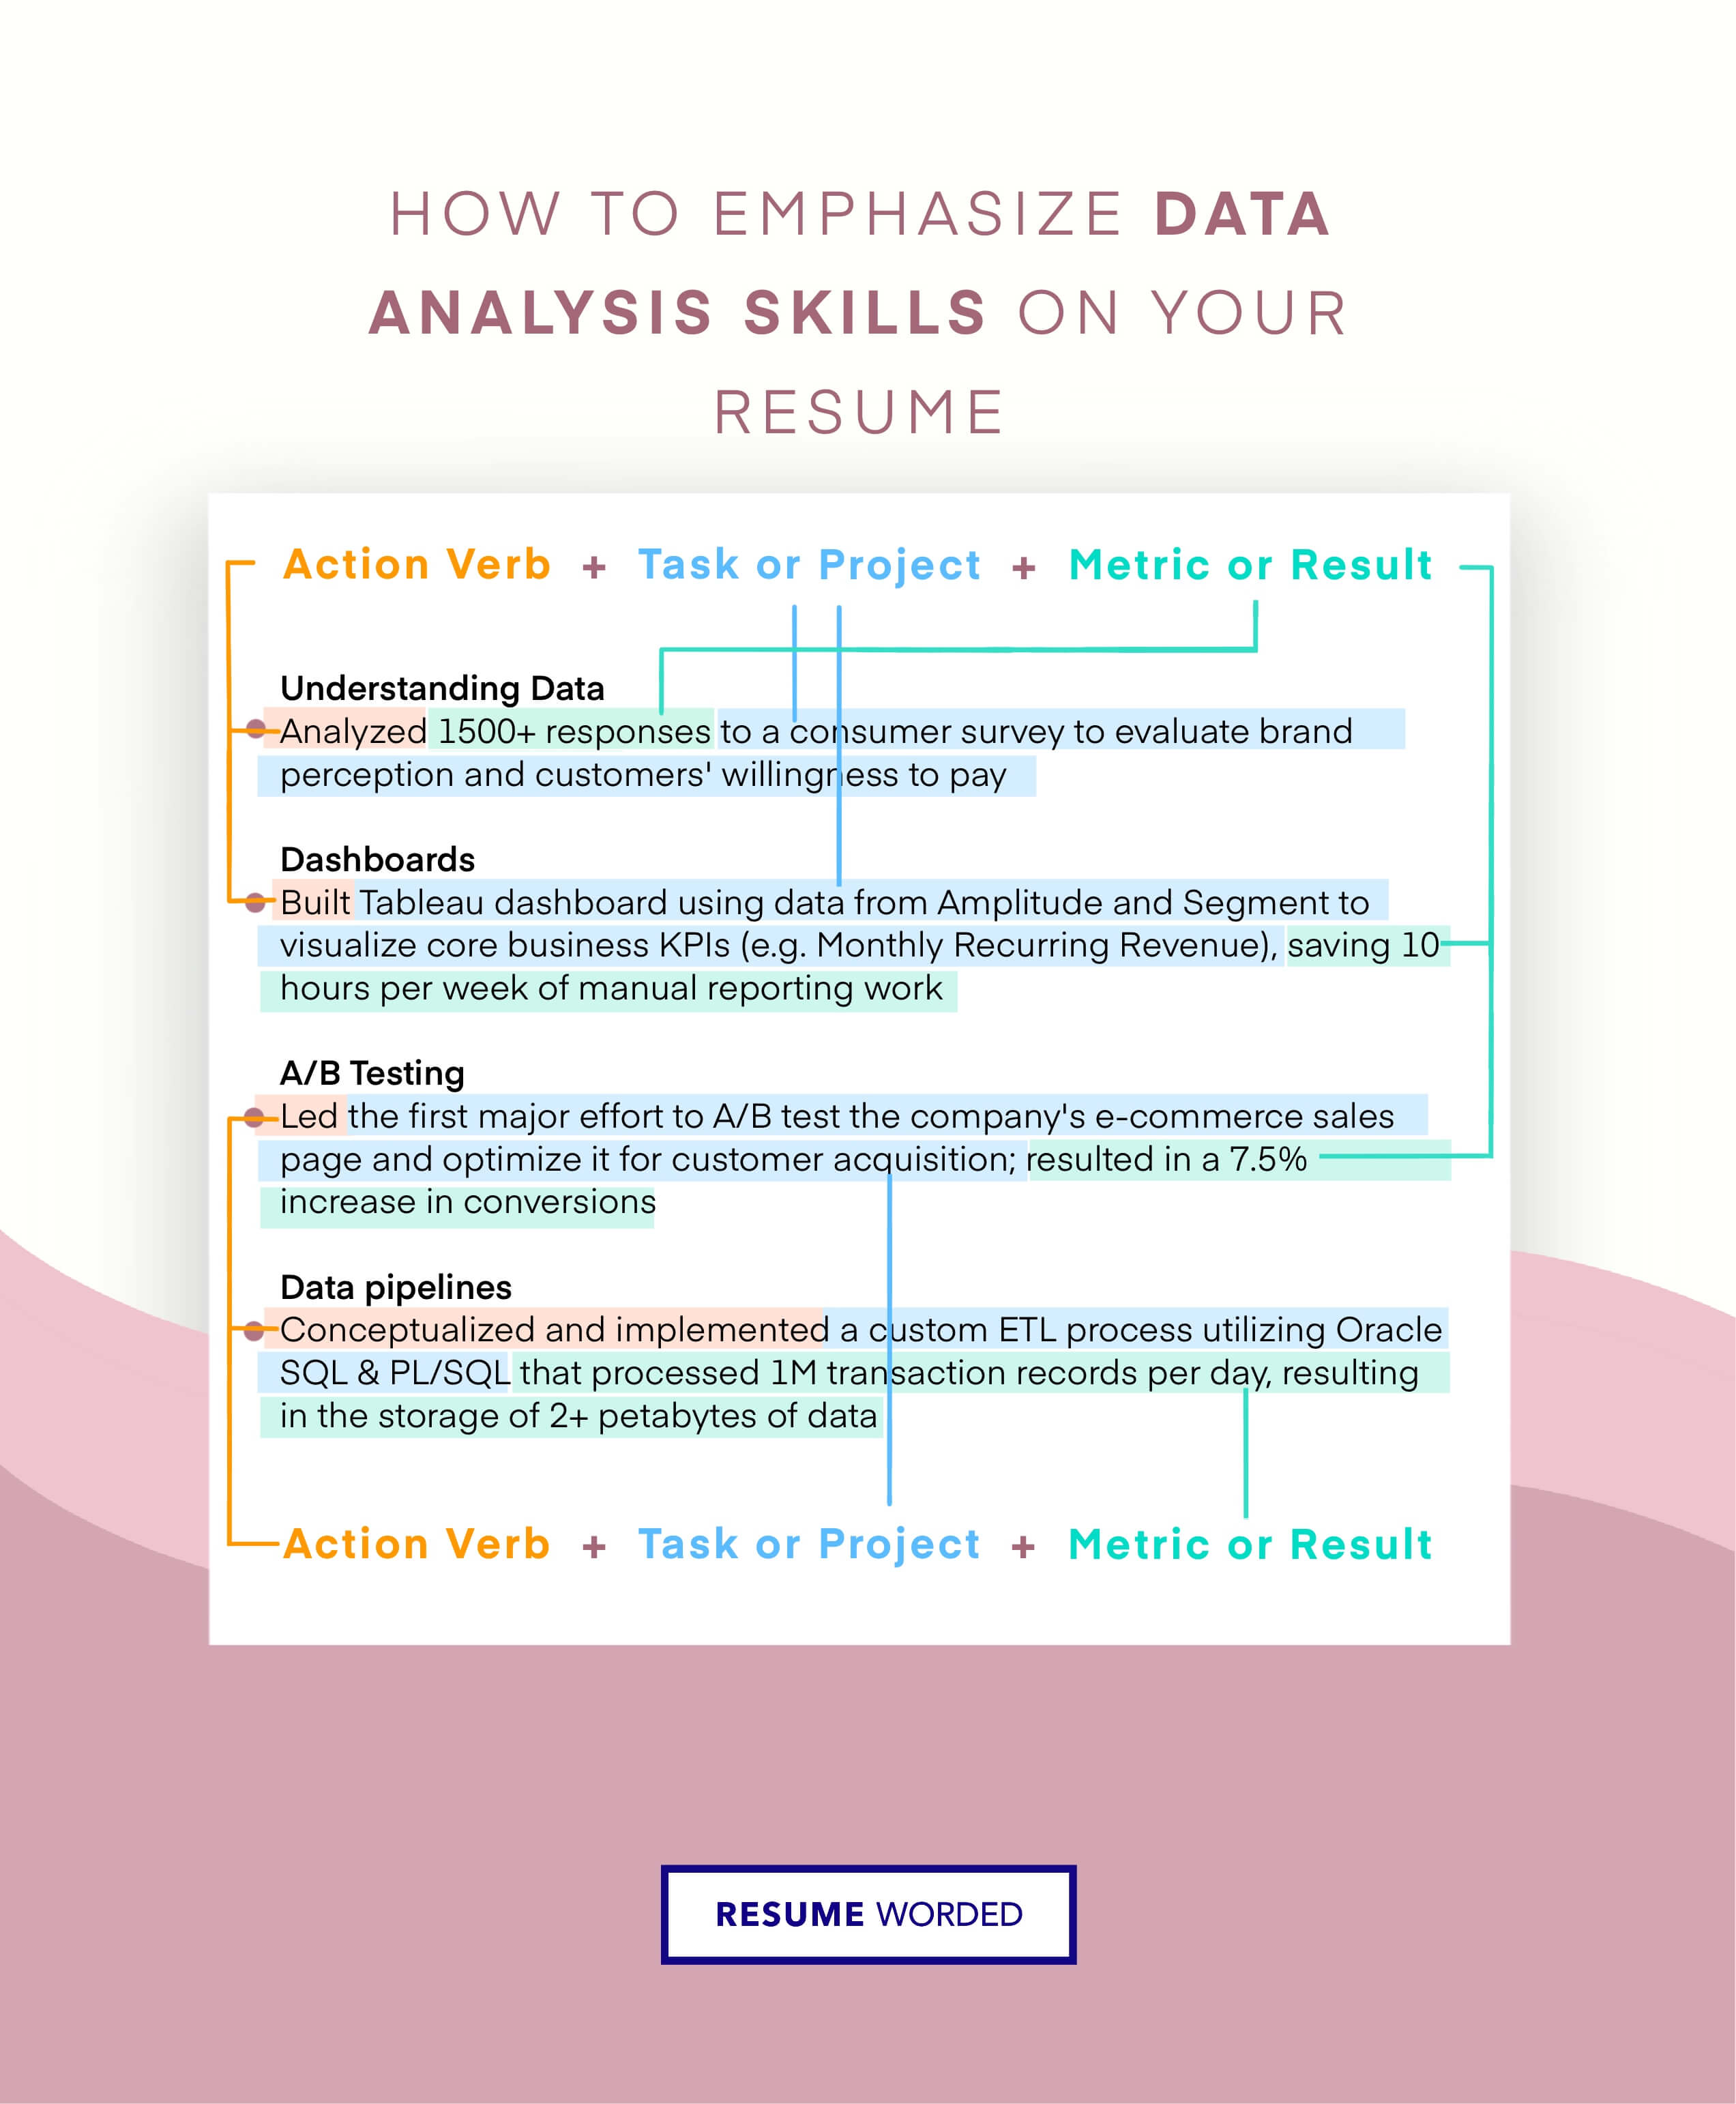 Showcase your data analysis skills - Management and Program Analyst  CV